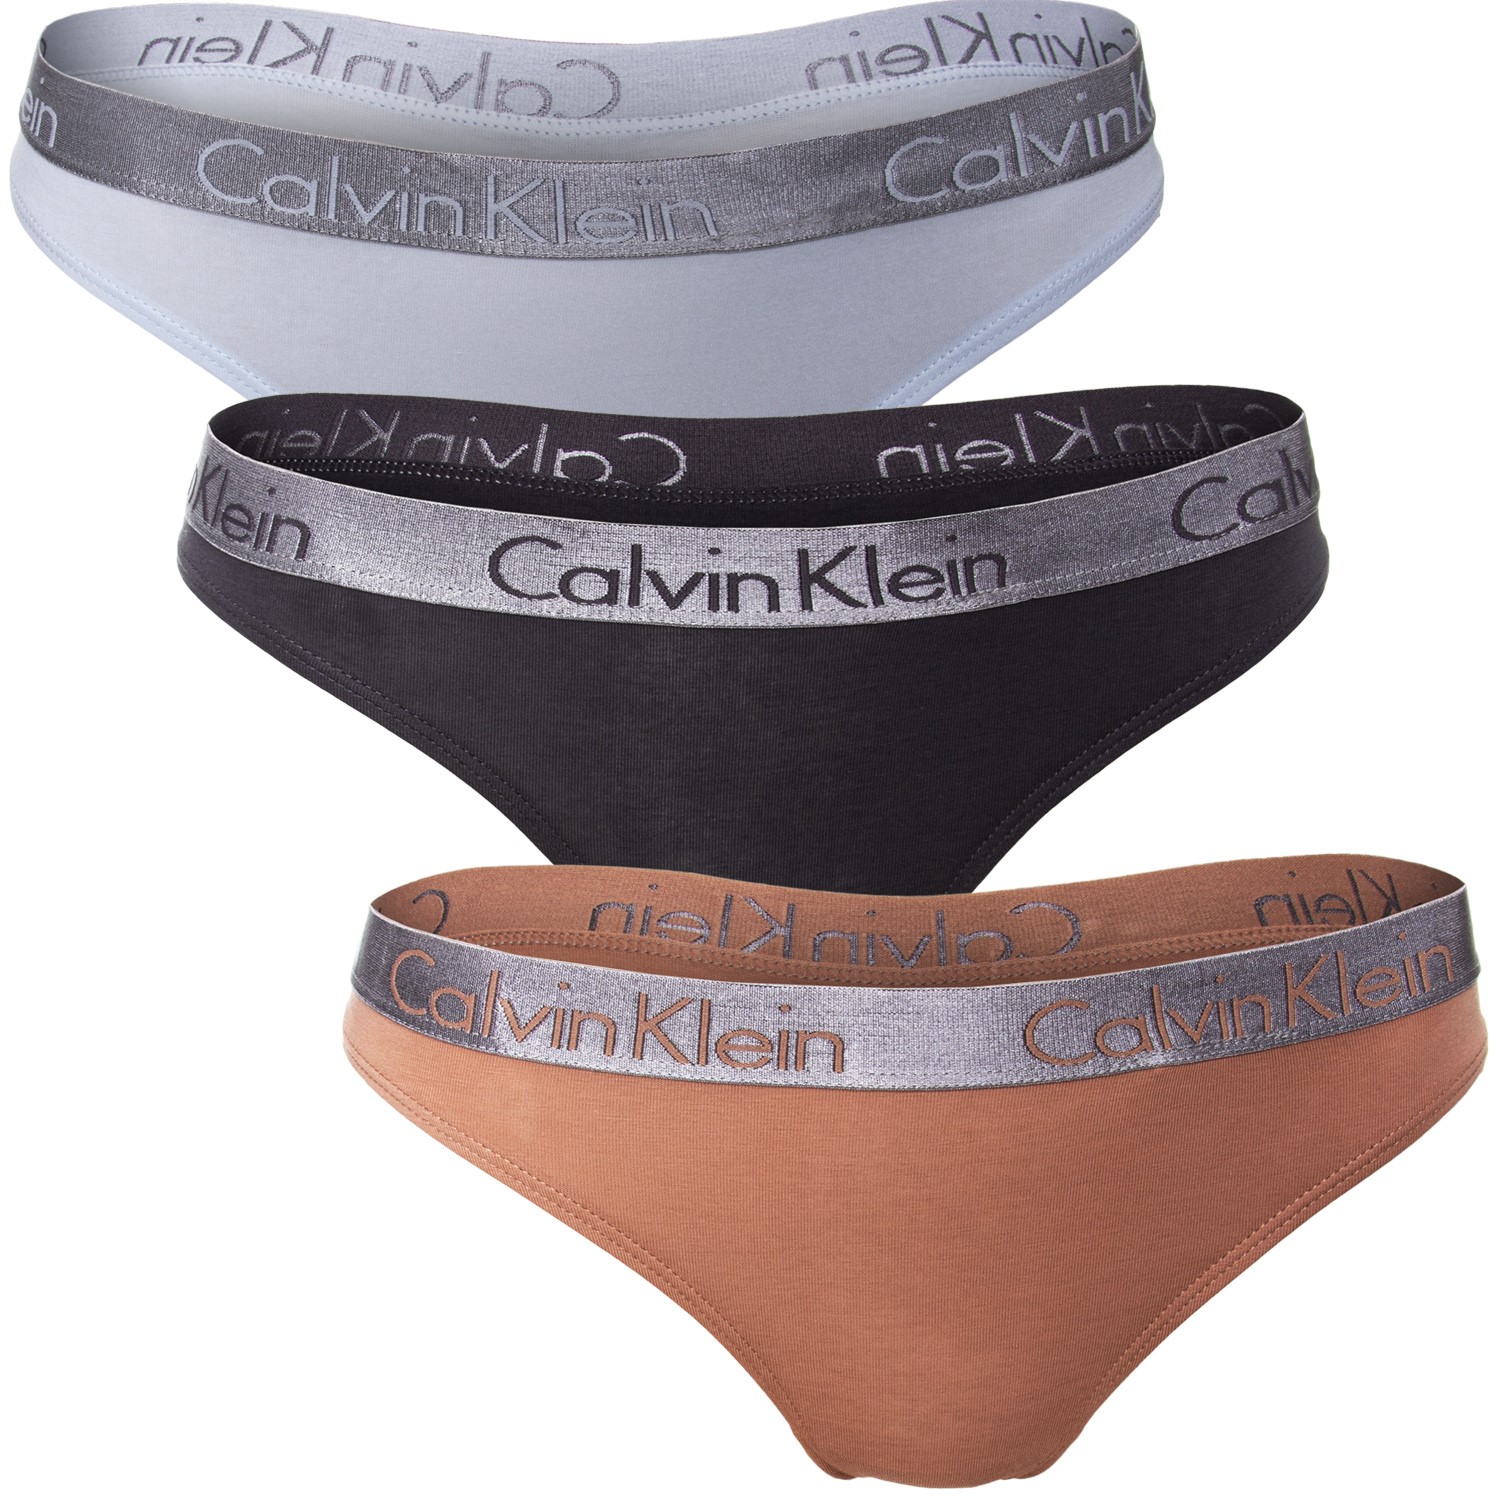 Calvin Klein Radiant Cotton Thong